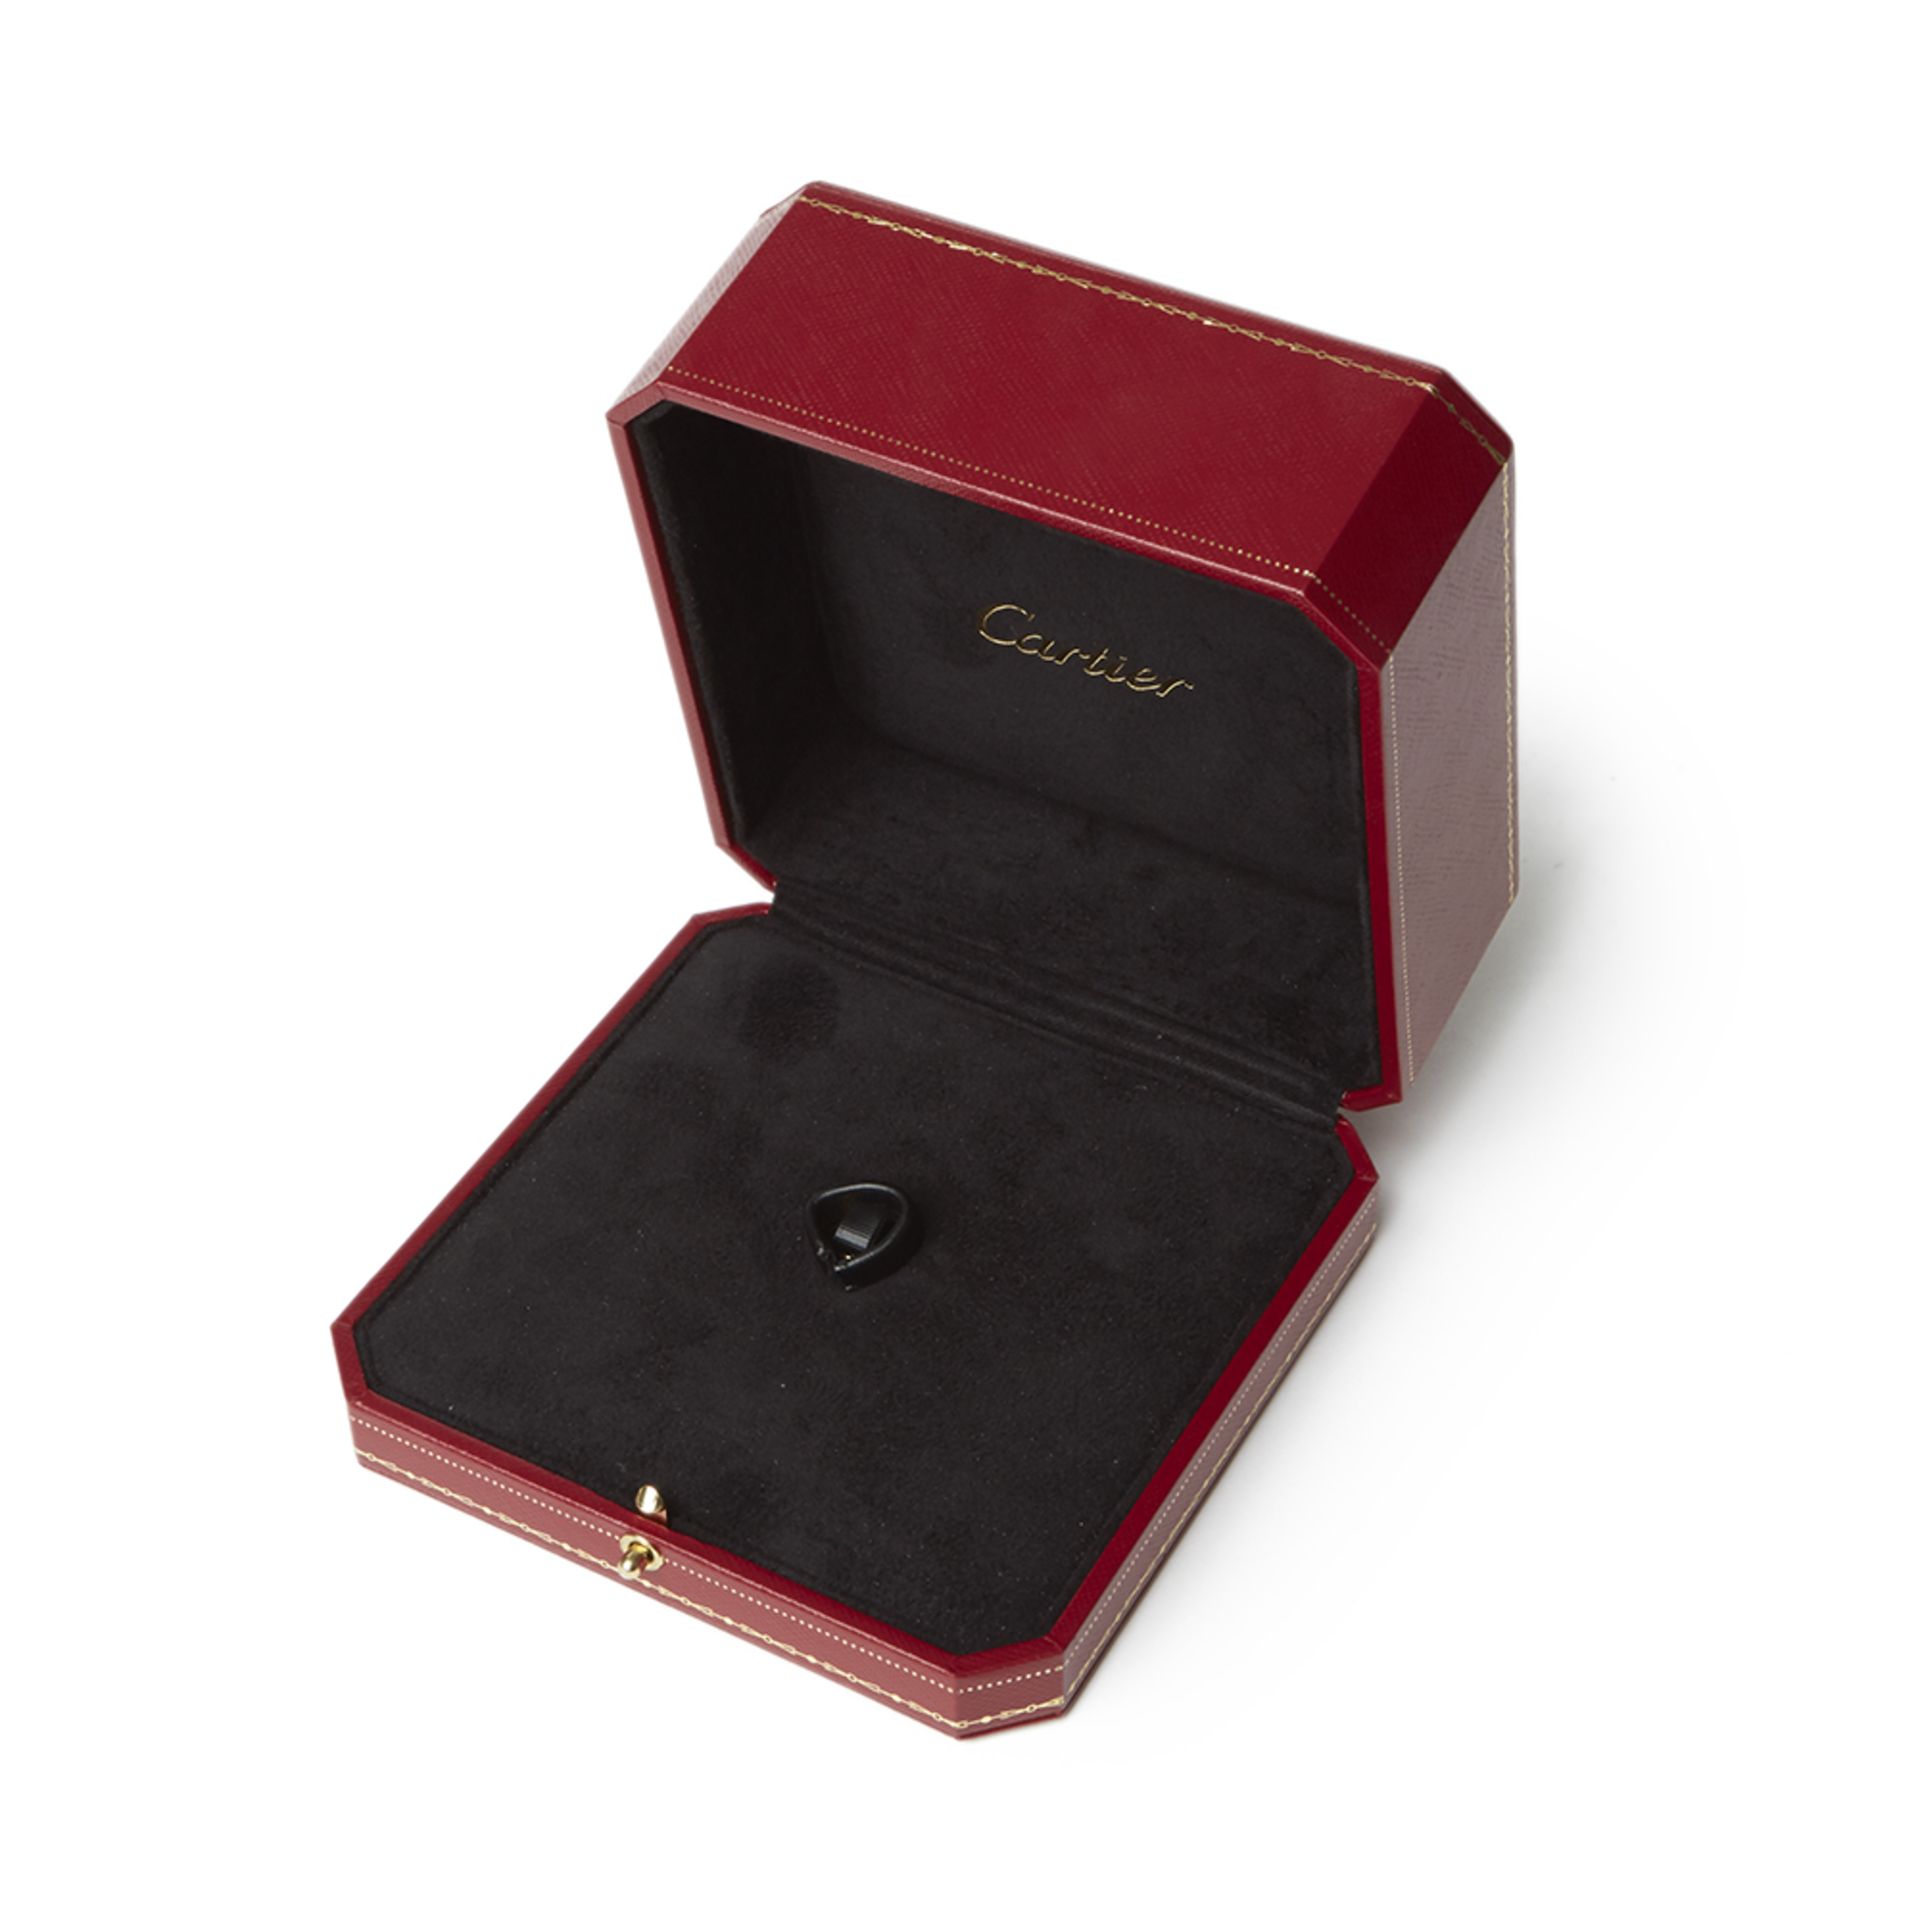 Cartier 18k Rose Gold Smoky Quartz & Diamond Cocktail Lotus Ring - Image 3 of 9